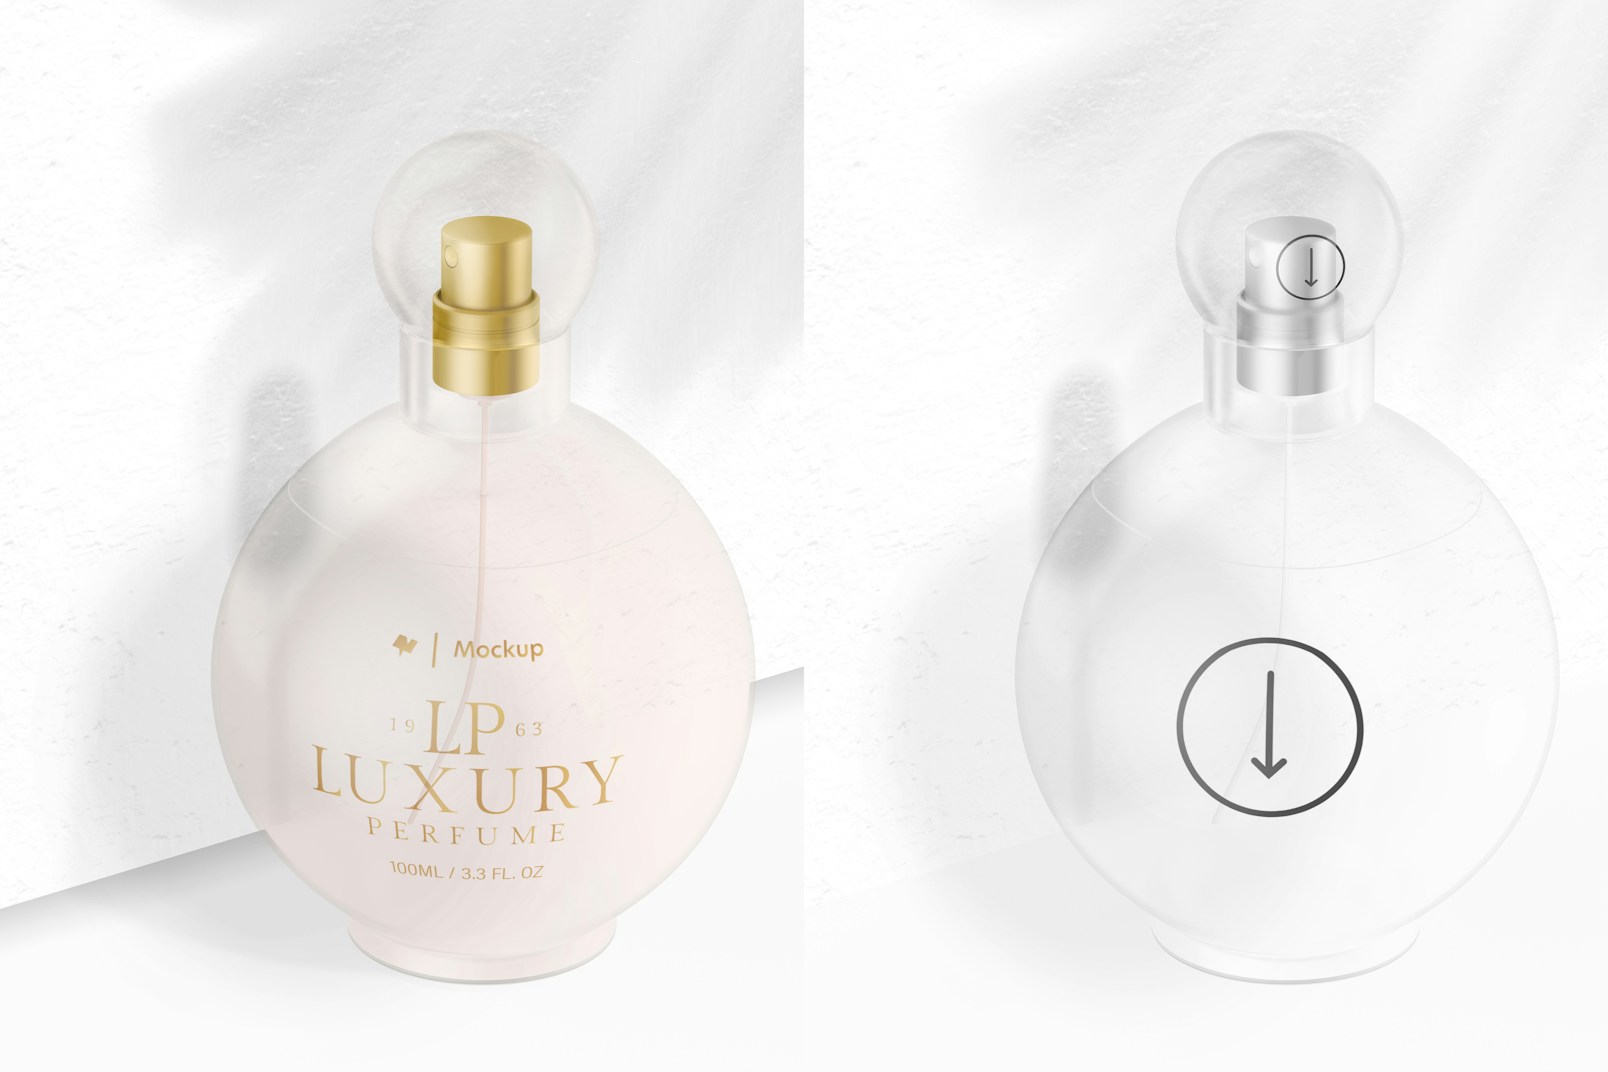 Stubby Luxury Perfume Bottle Mockup, Right View